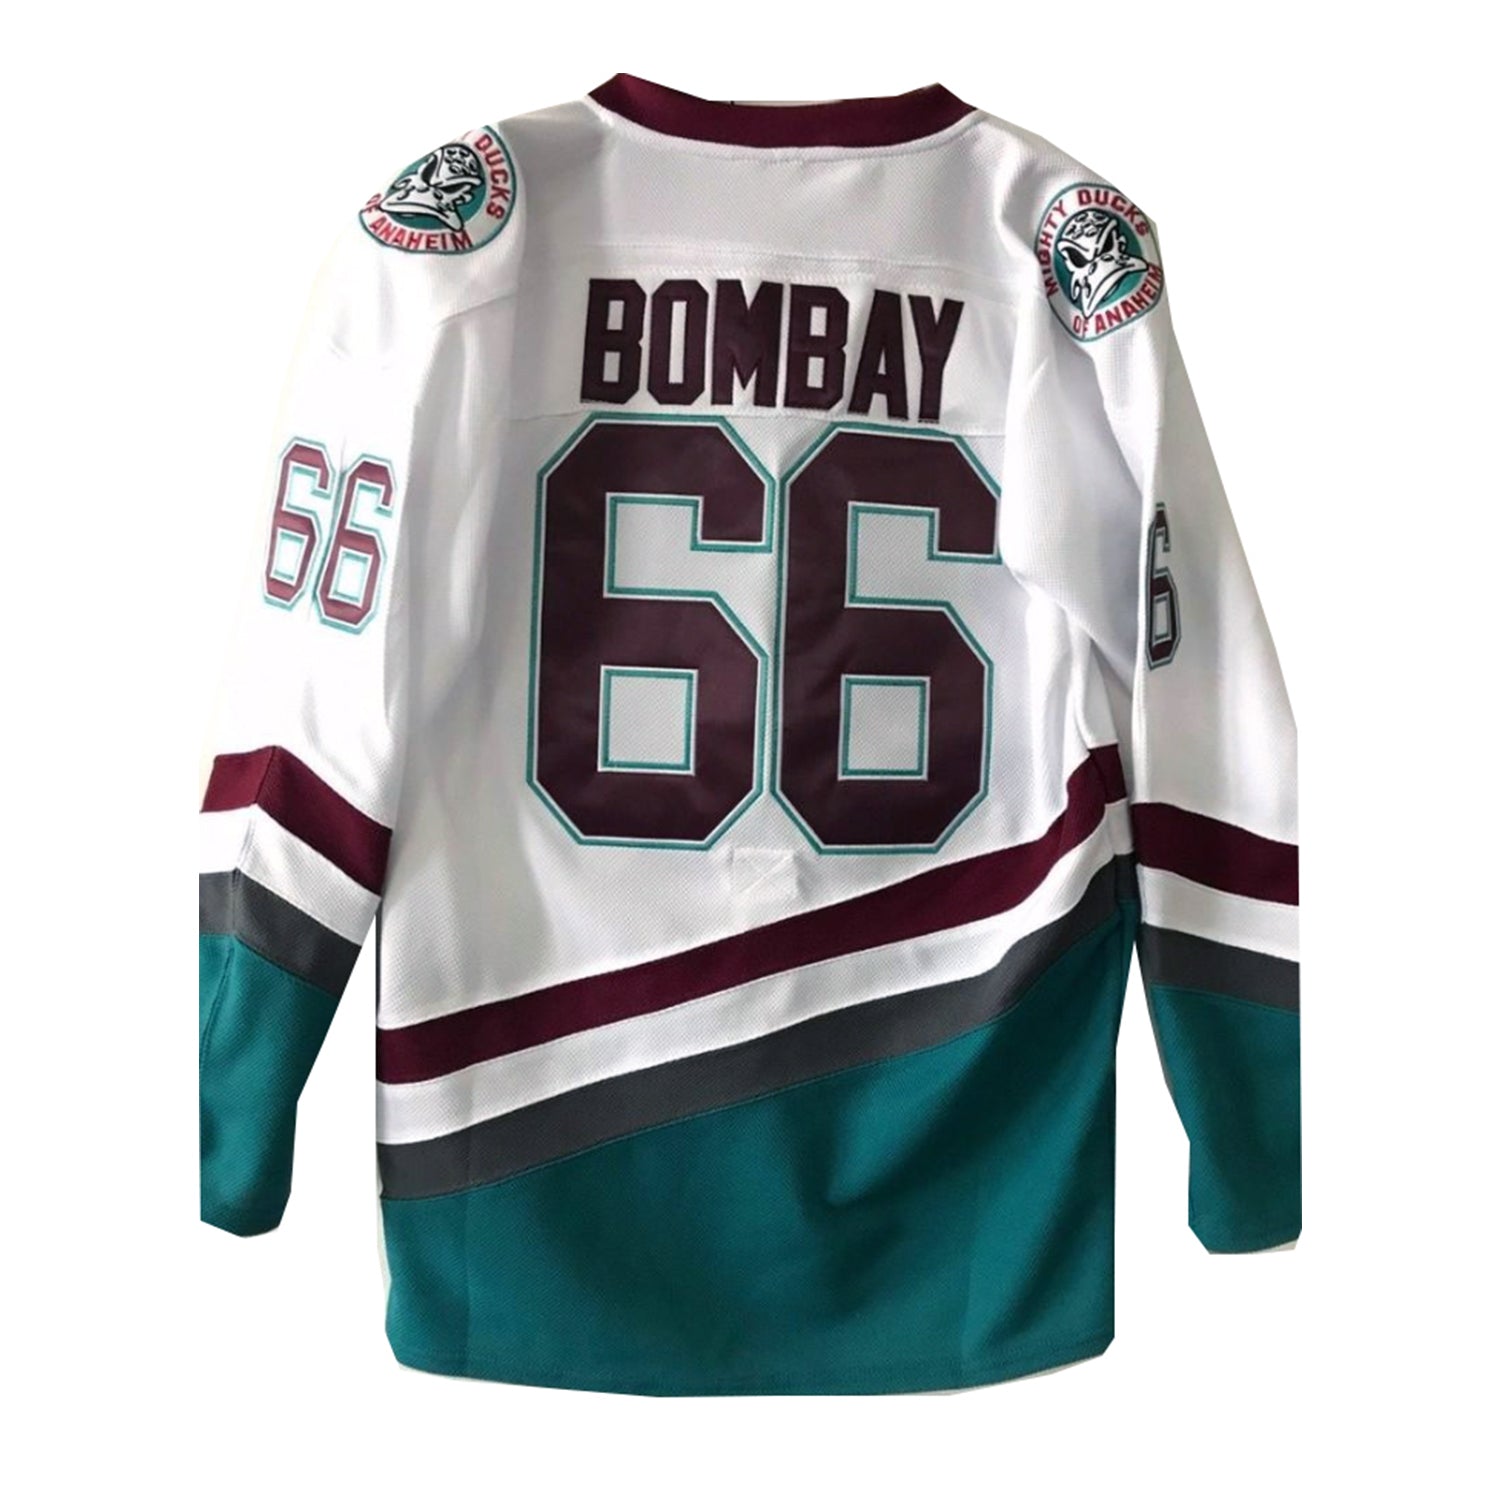 Mighty Ducks Jersey #66 Gordon Bombay Movie Hockey Jersey Green All  Stitched